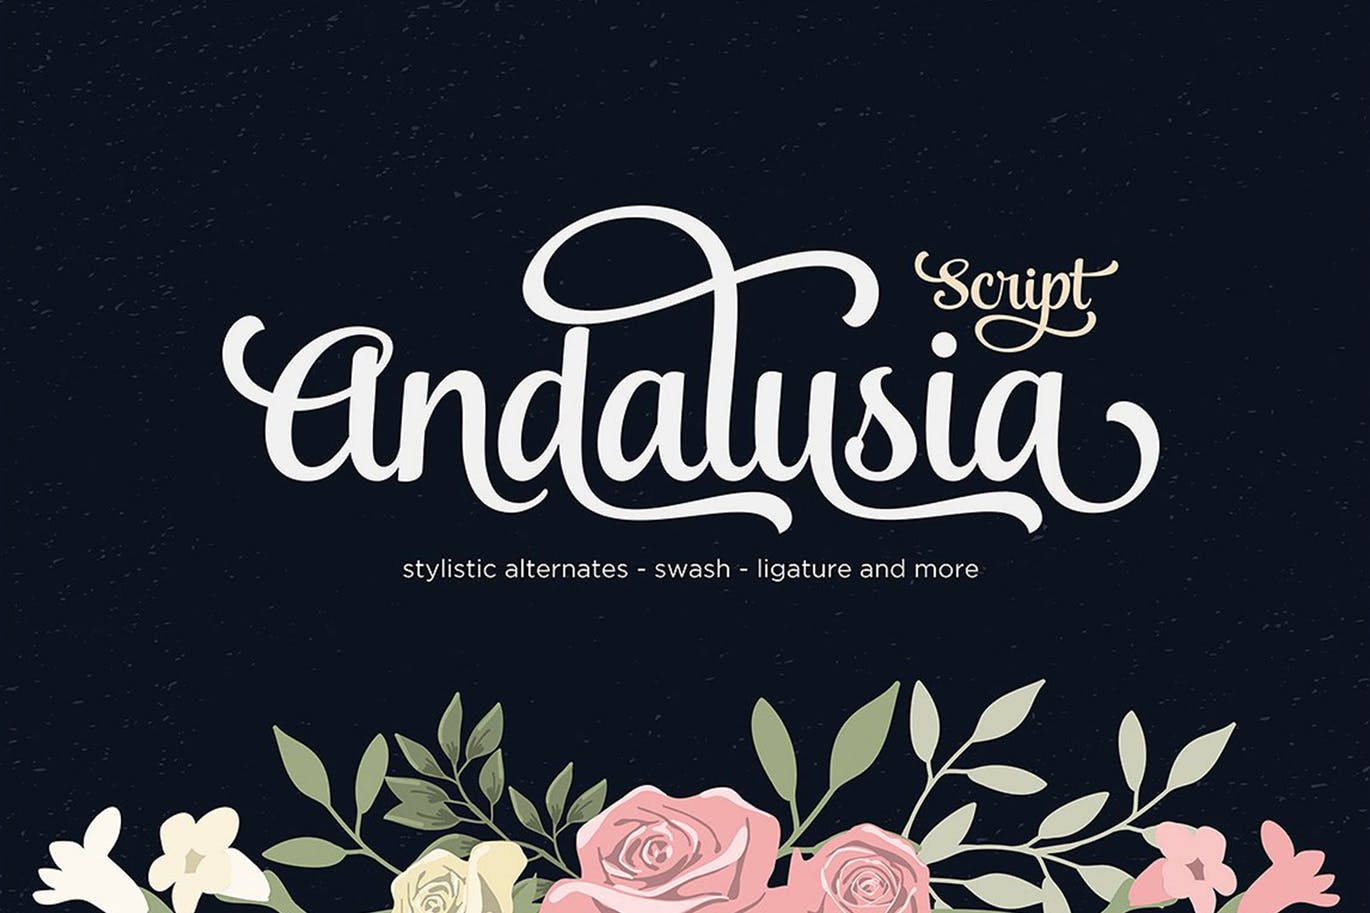 A stylistic and elegant wedding font